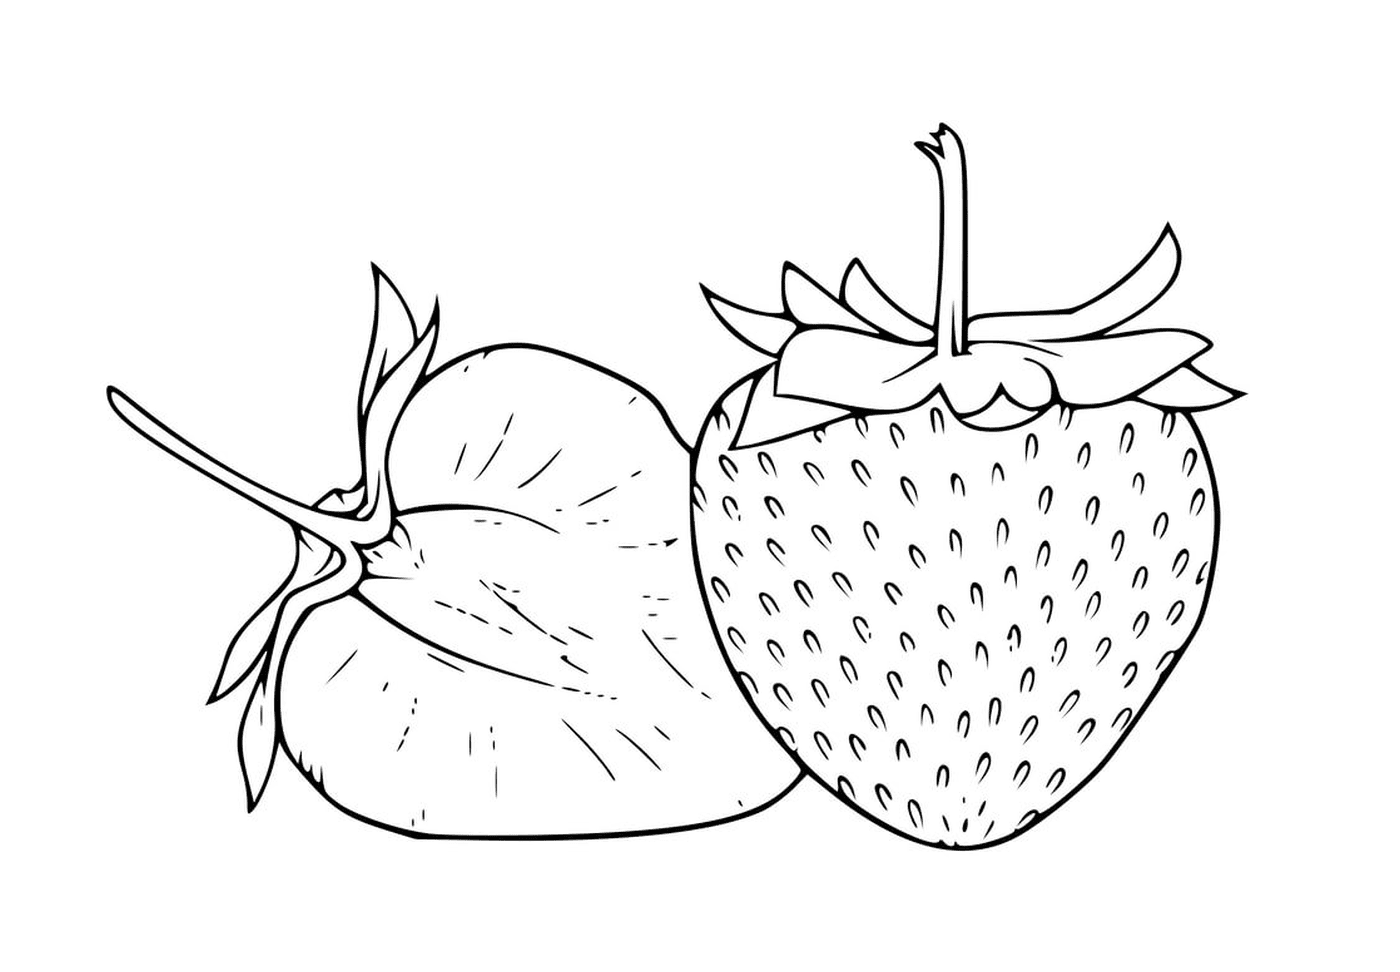 Strawberry and melon cut realistic